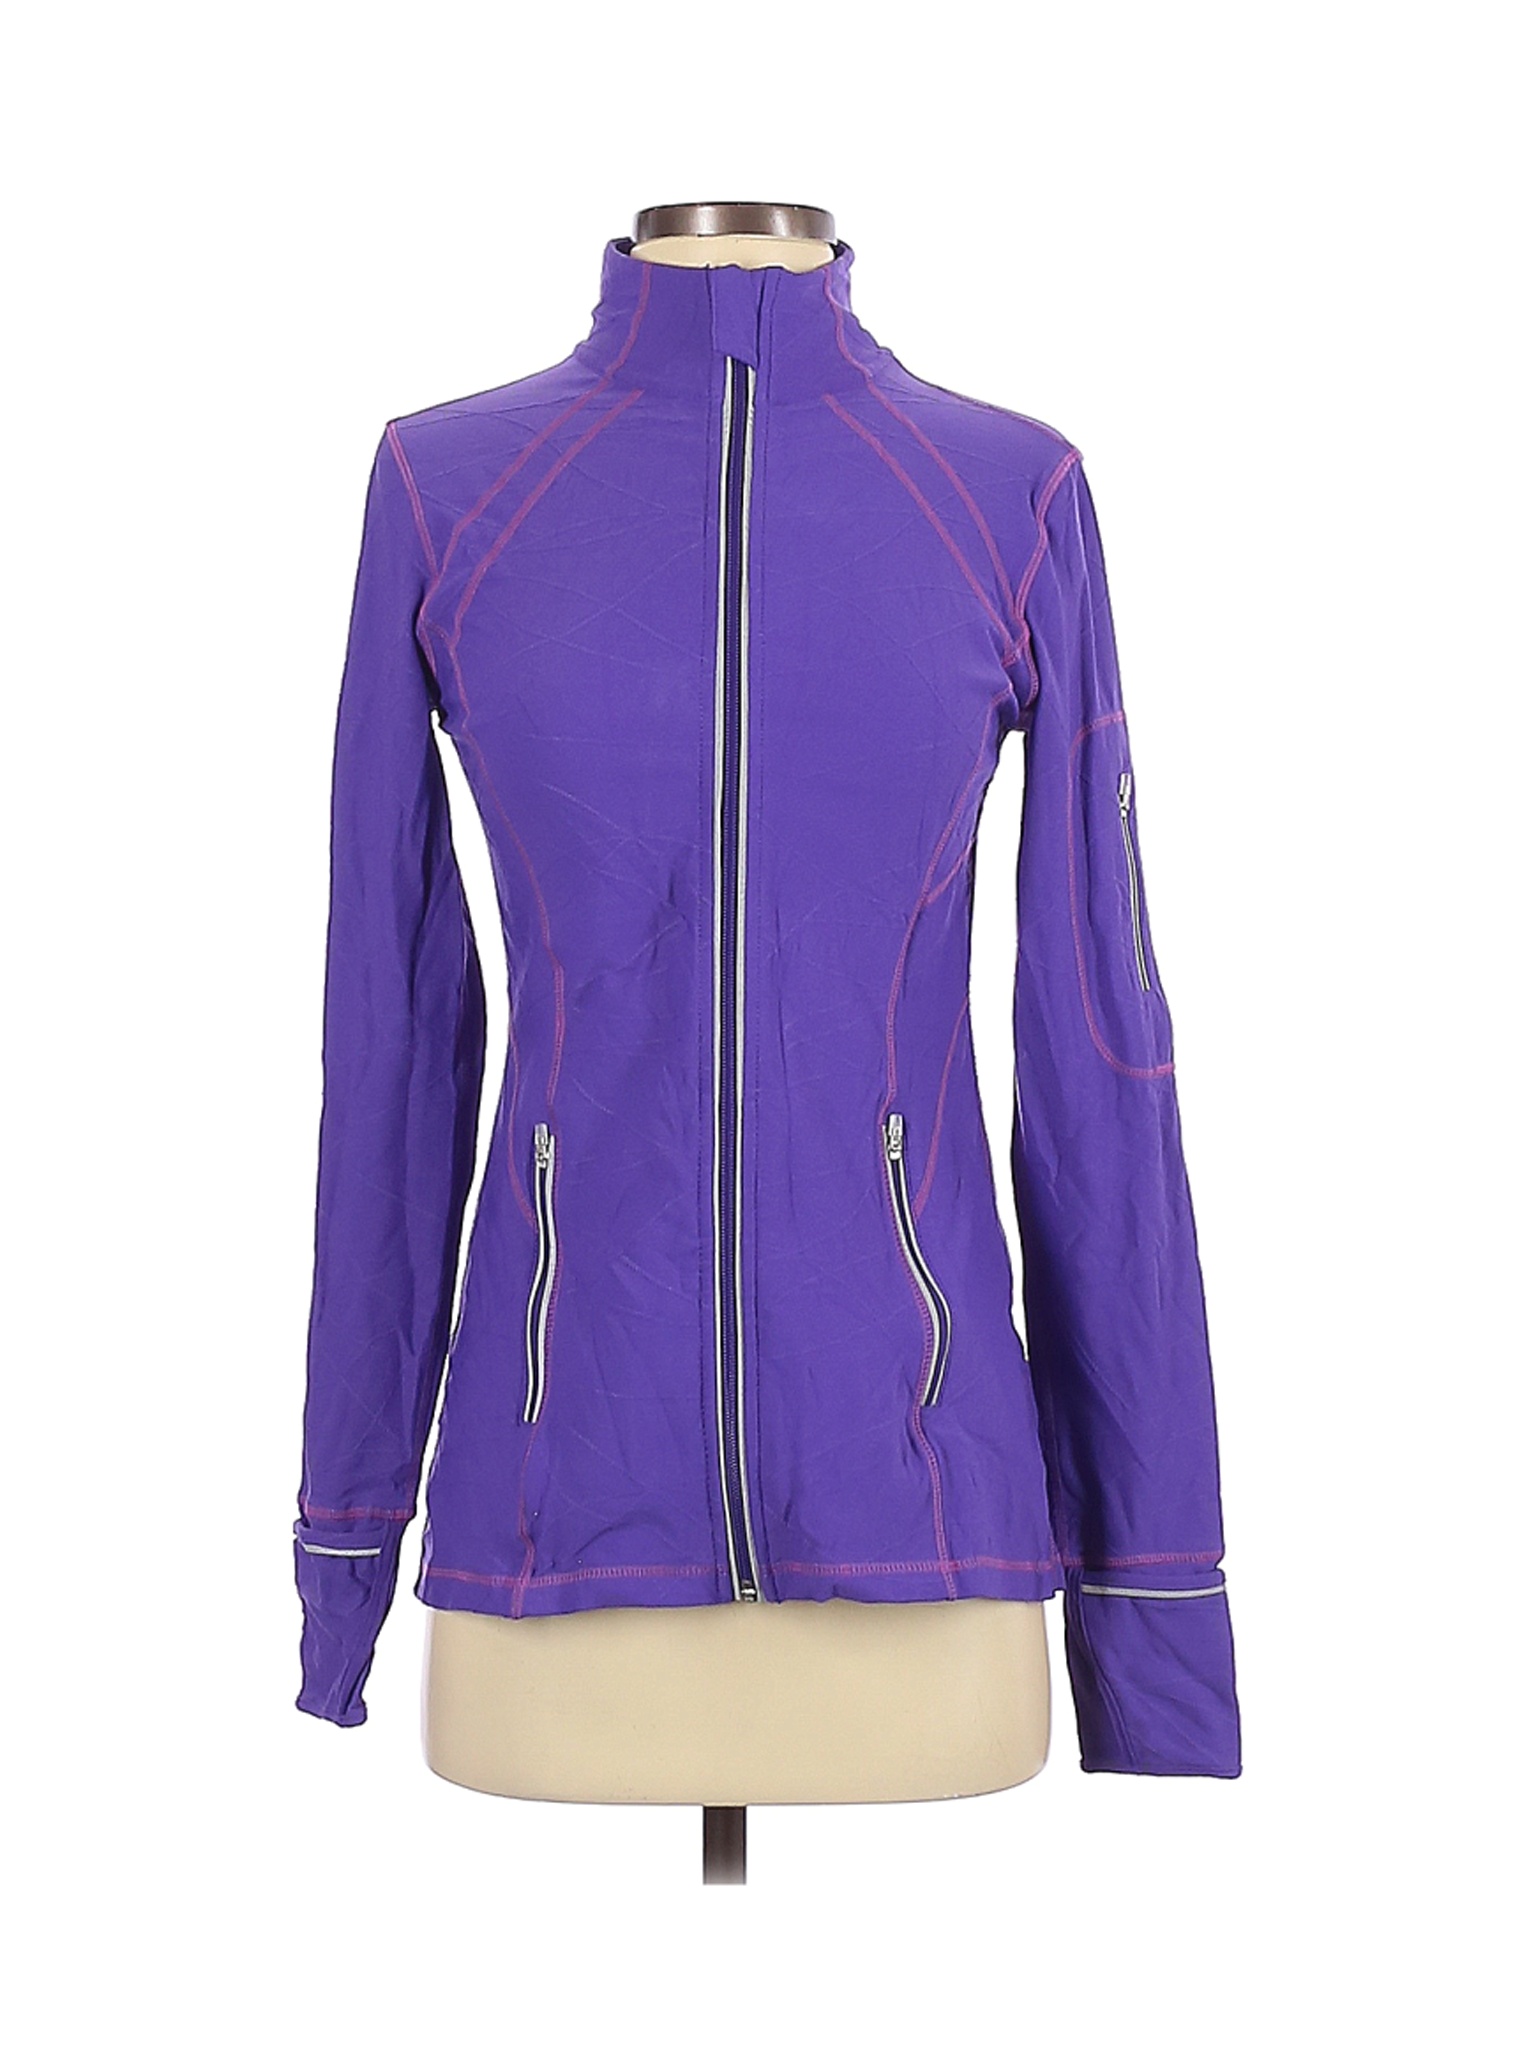 KIRKLAND Signature Women Purple Track Jacket S | eBay